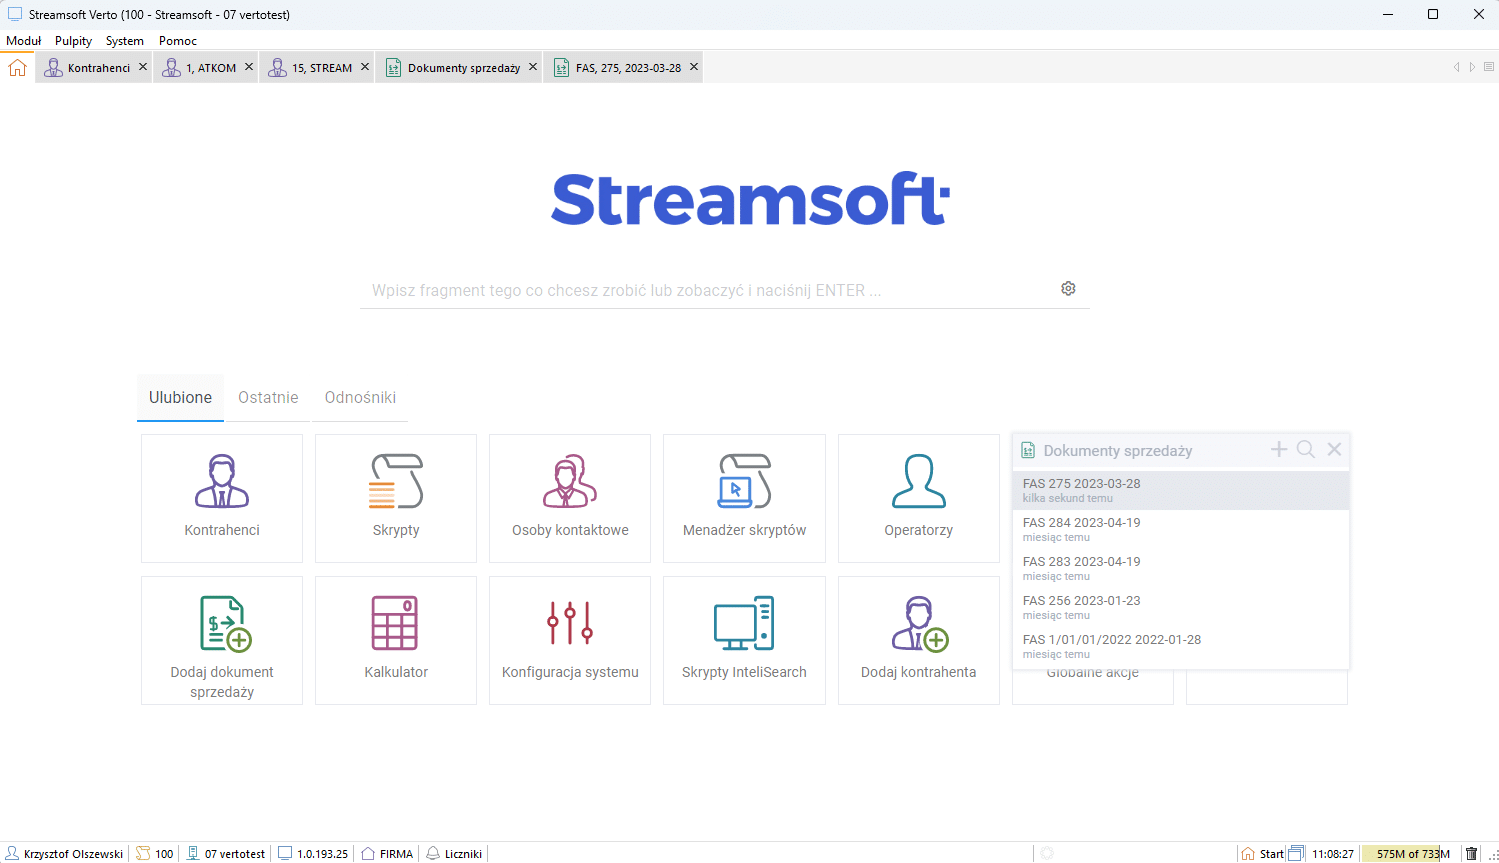 streamsoft verto pulpit screenshot